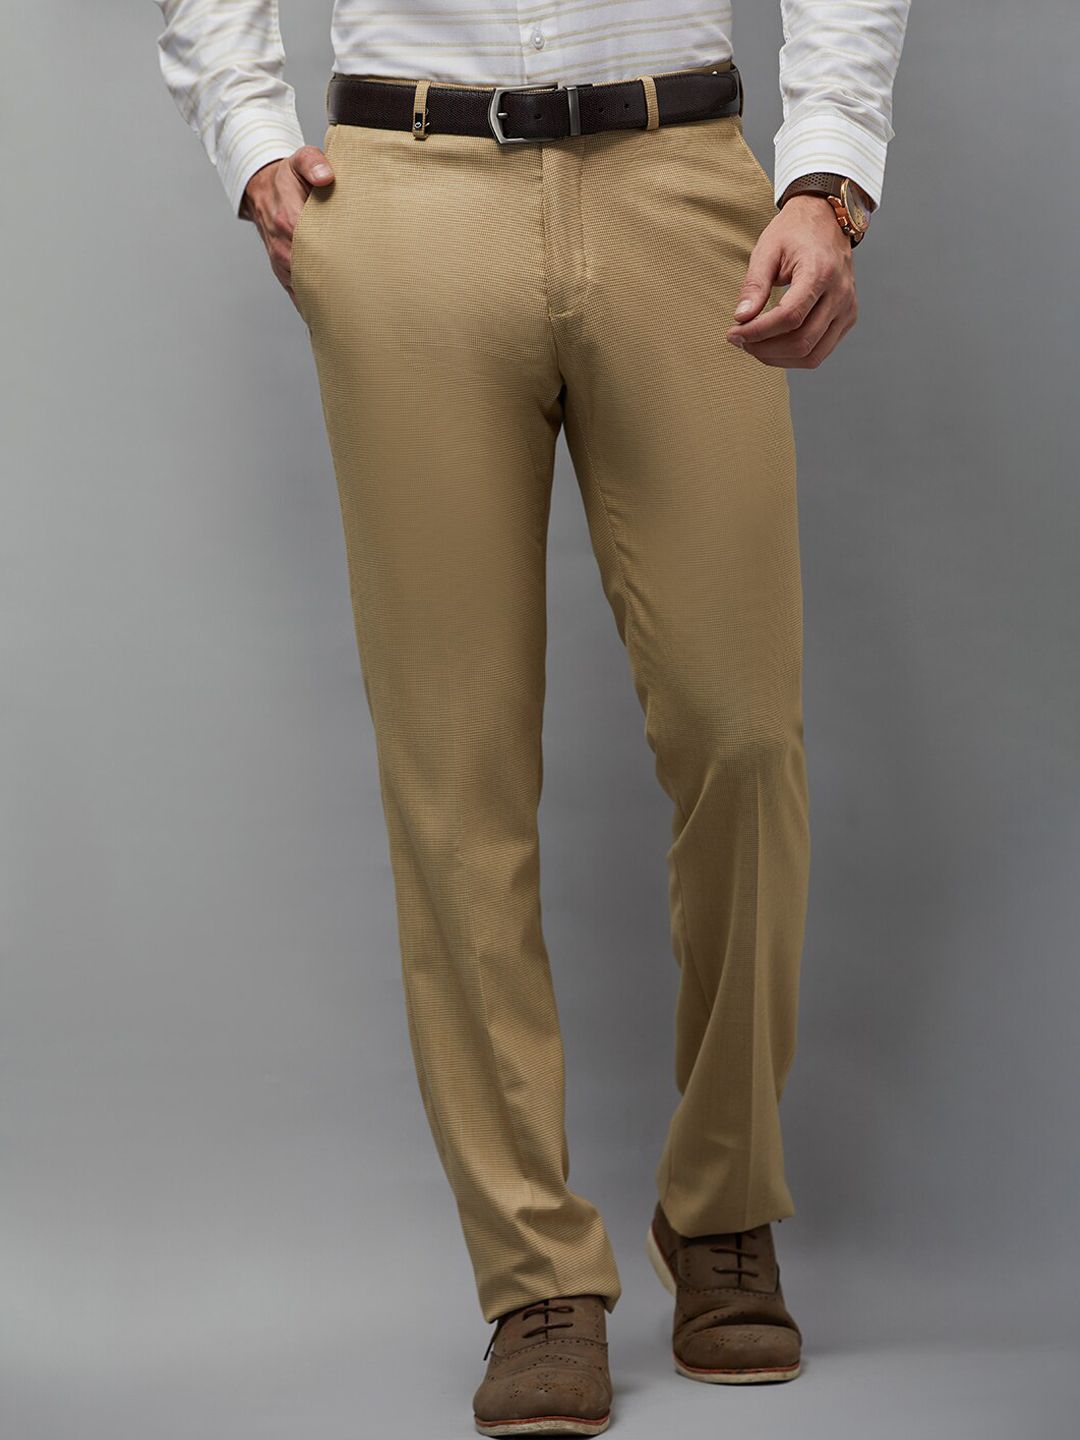 Buy Oxemberg Mens Slim Pants F6164BBeige38 at Amazonin